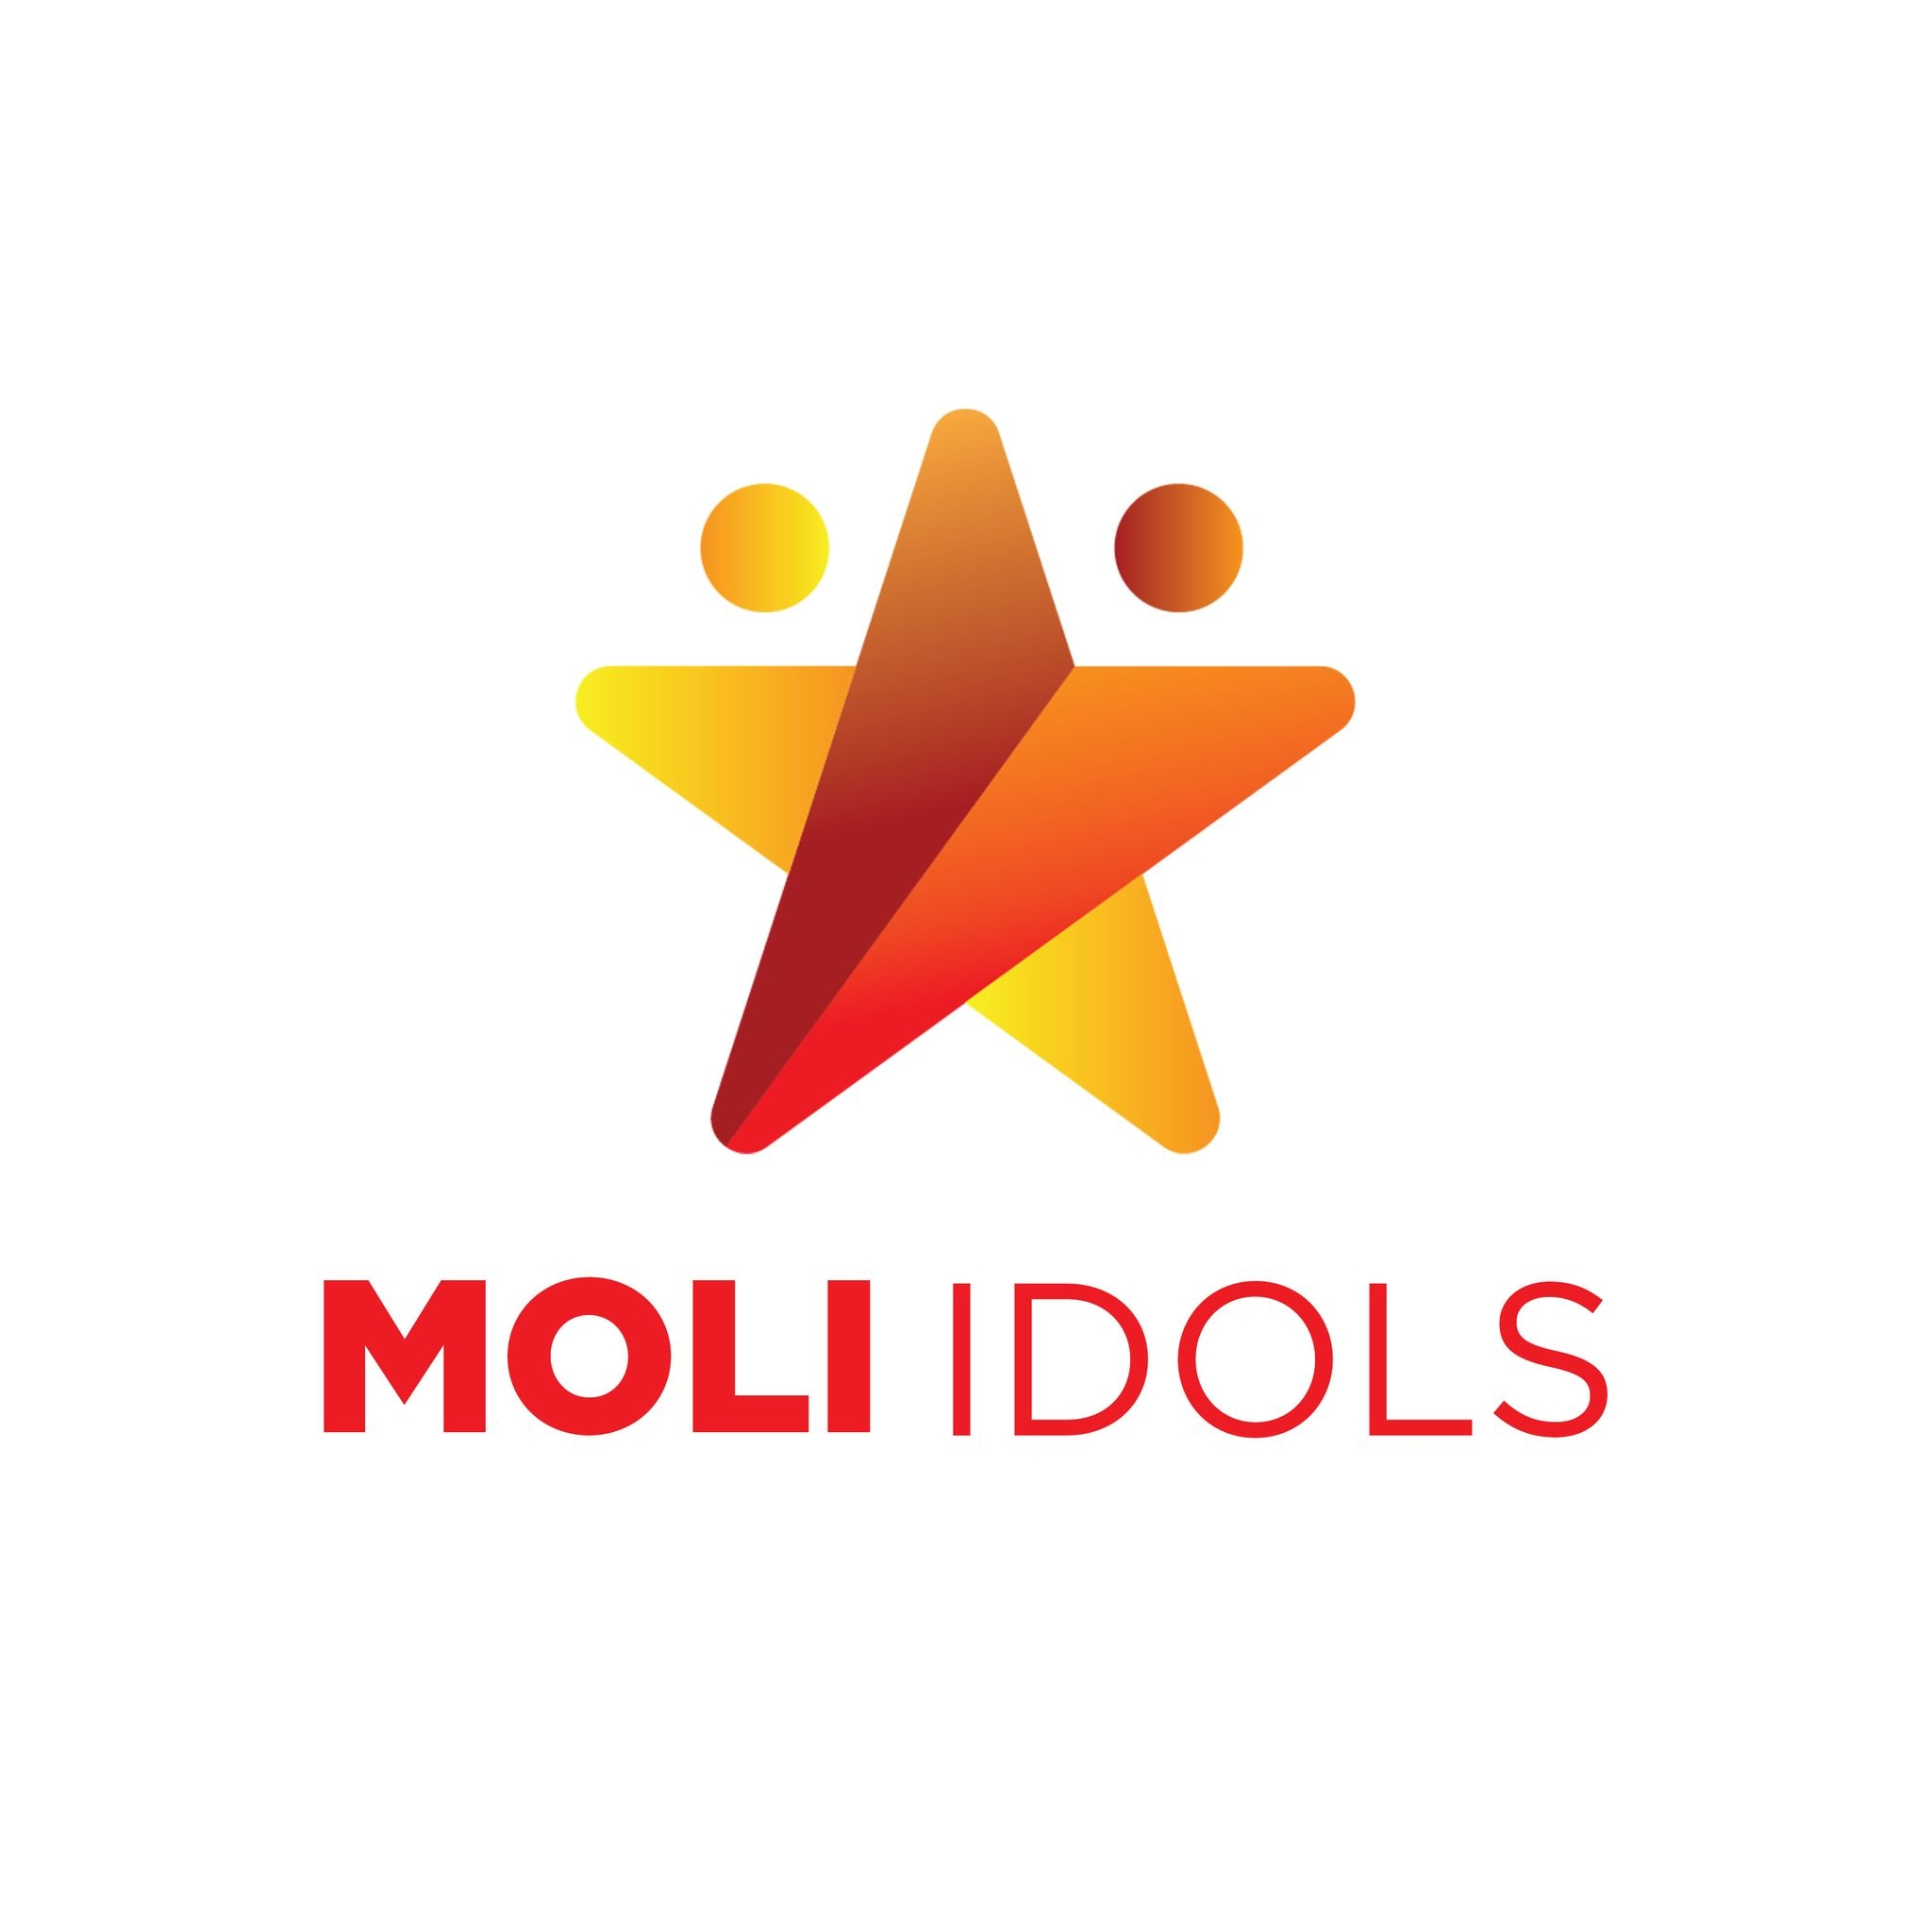 Moli Idols